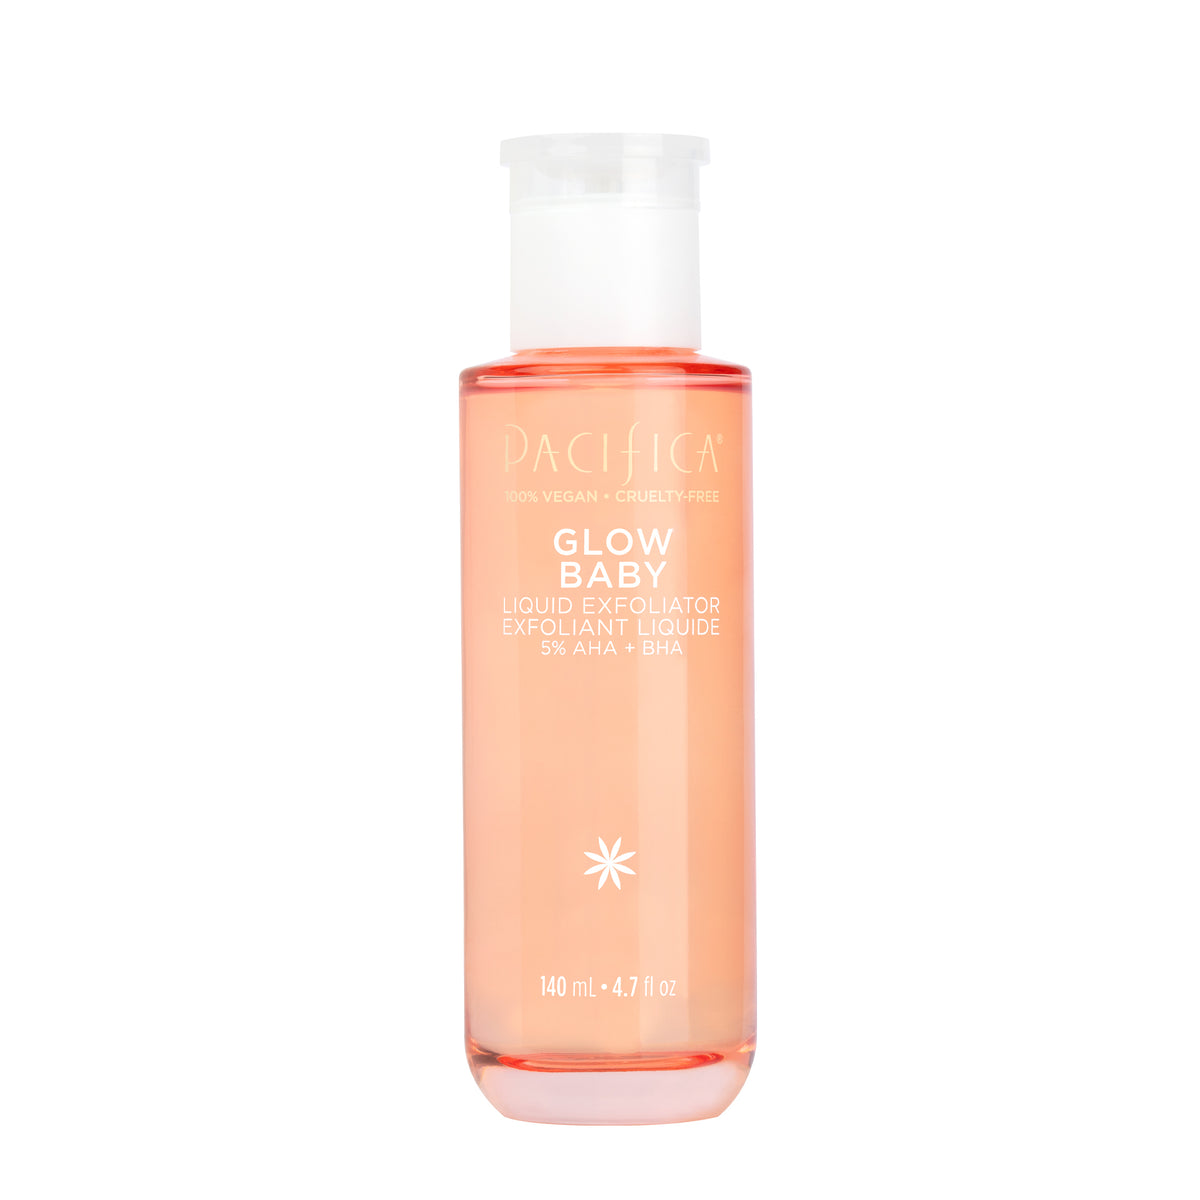 Glow Baby Liquid Exfoliant 5% AHA + BHA - Skin Care - Pacifica Beauty